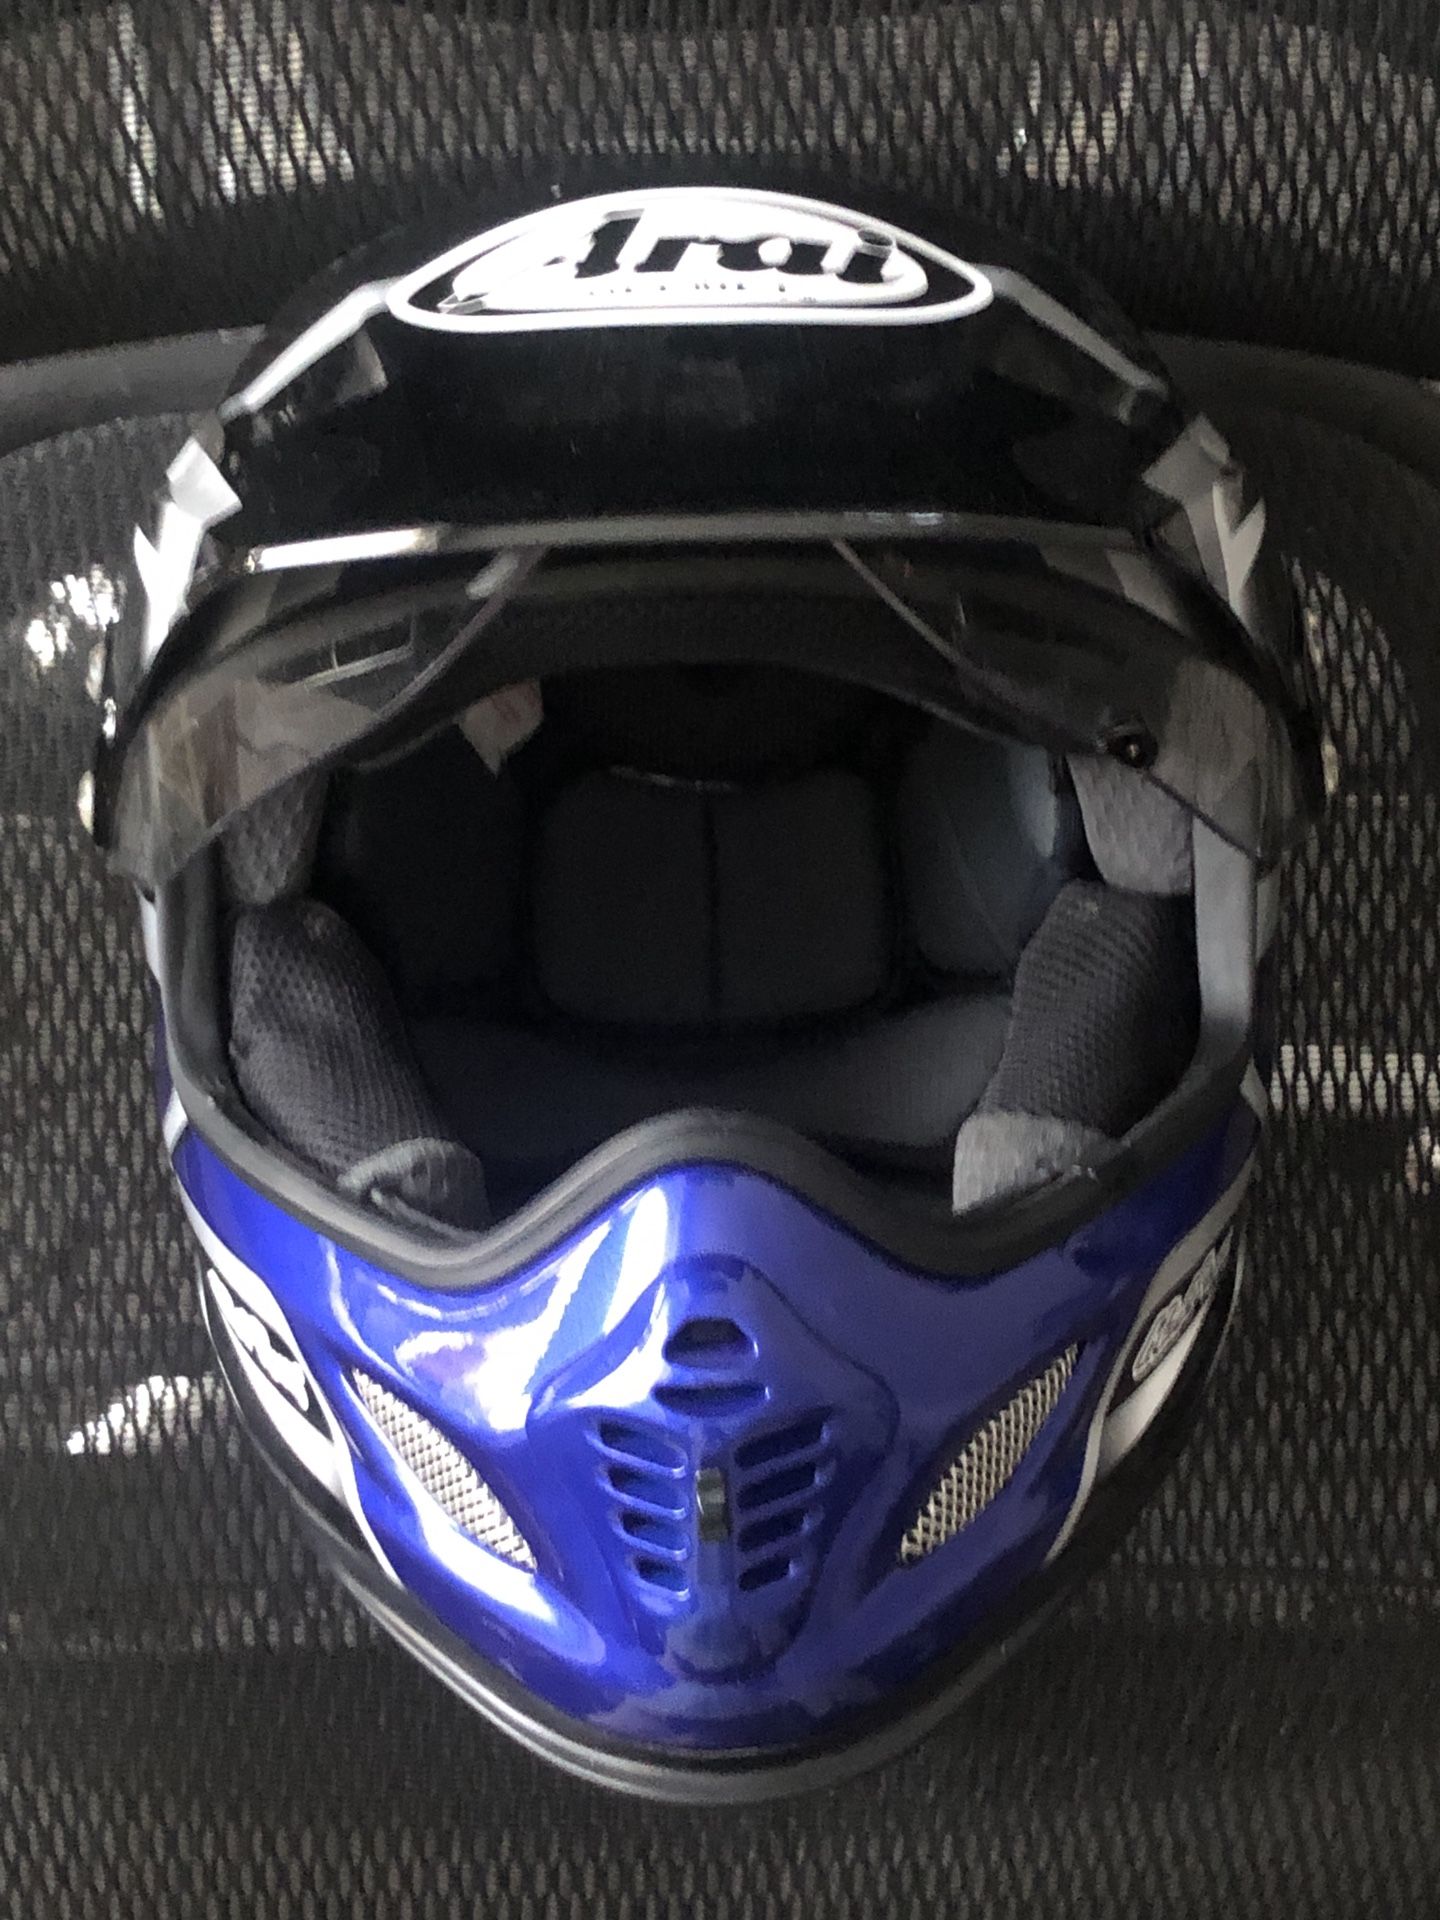 Arai XD4 motorcycle helmets (2 available)